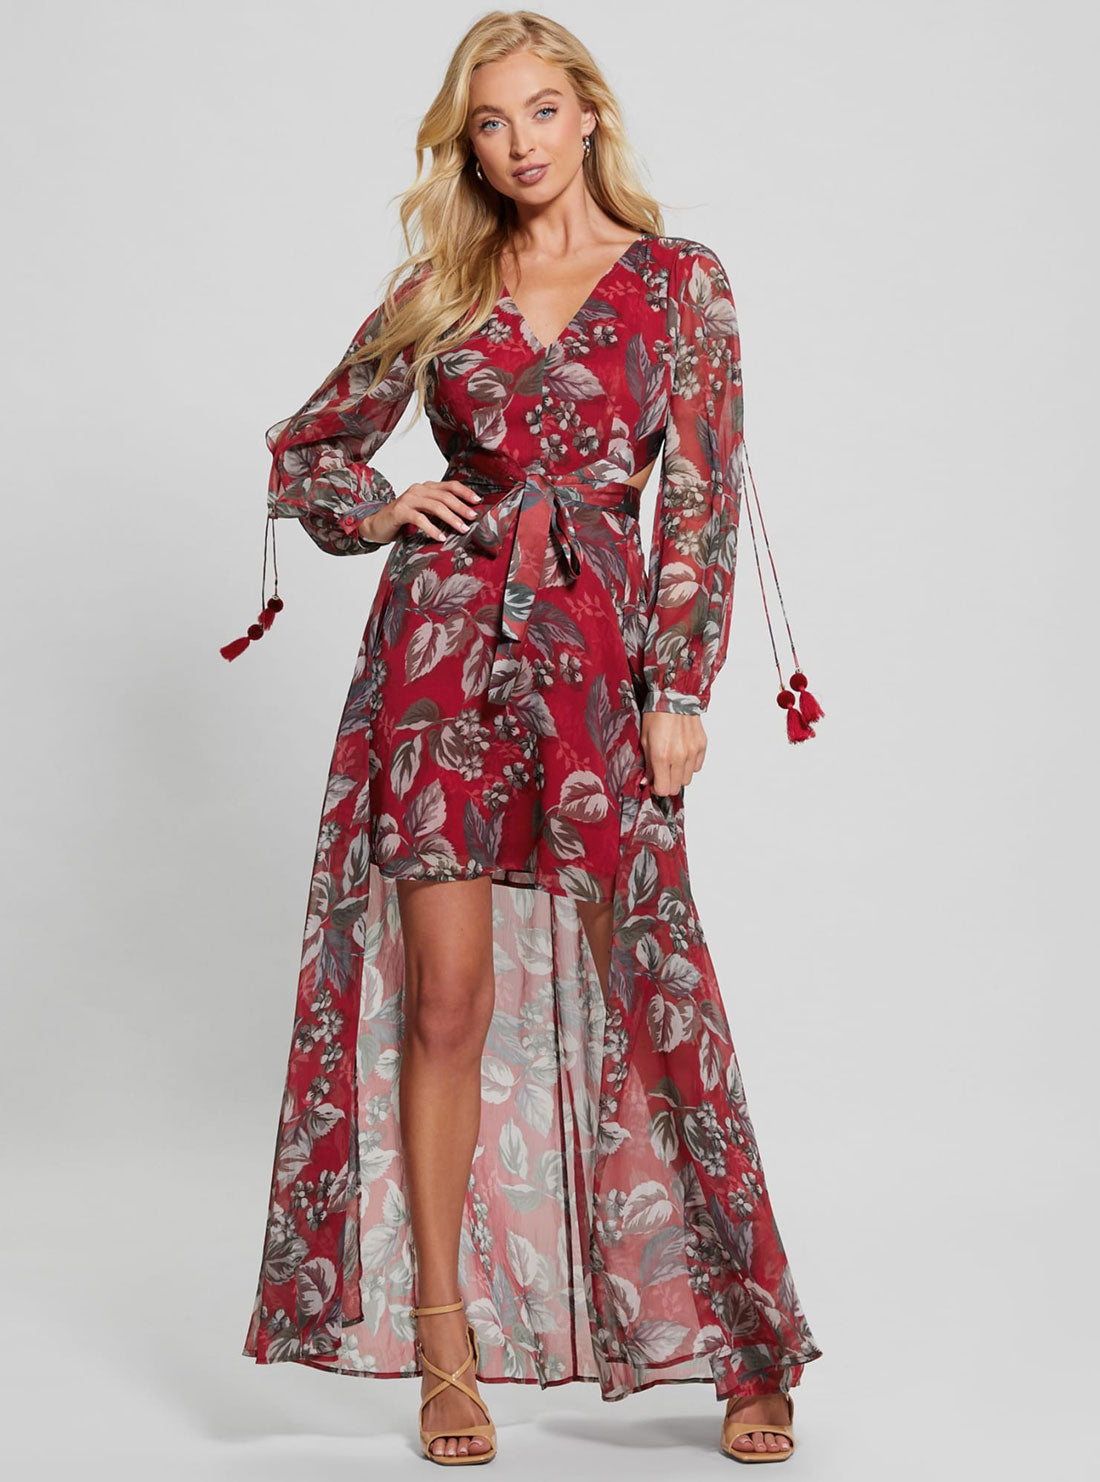 Red Floral Farrah Multi Dress | GUESS Women's Apparel | front view